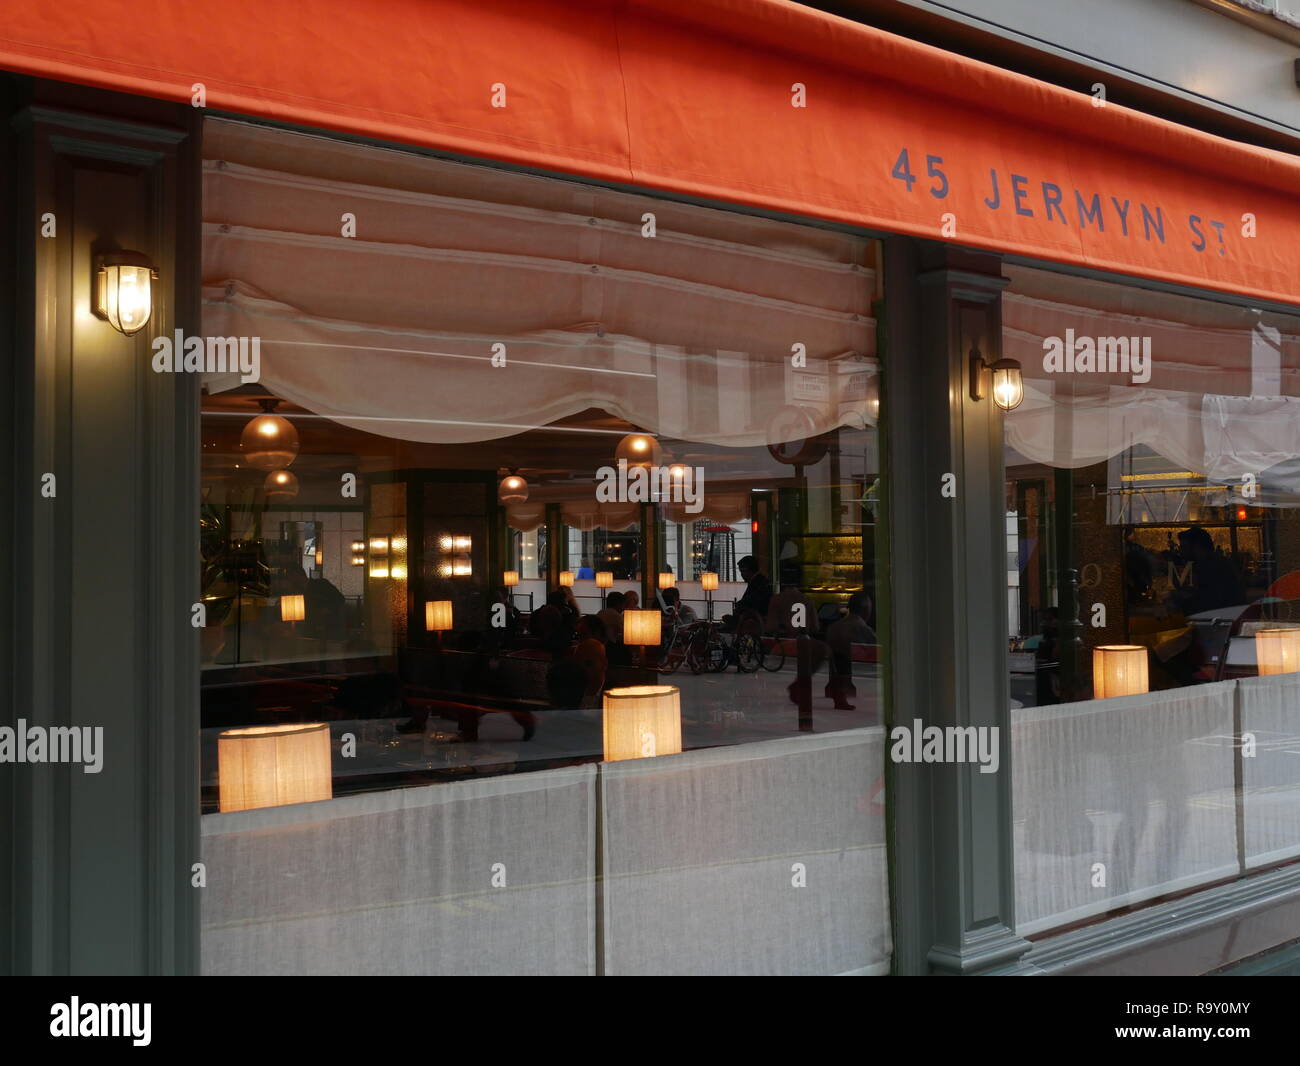 45 Jermyn Street restaurant in St. James, London, England. Stock Photo